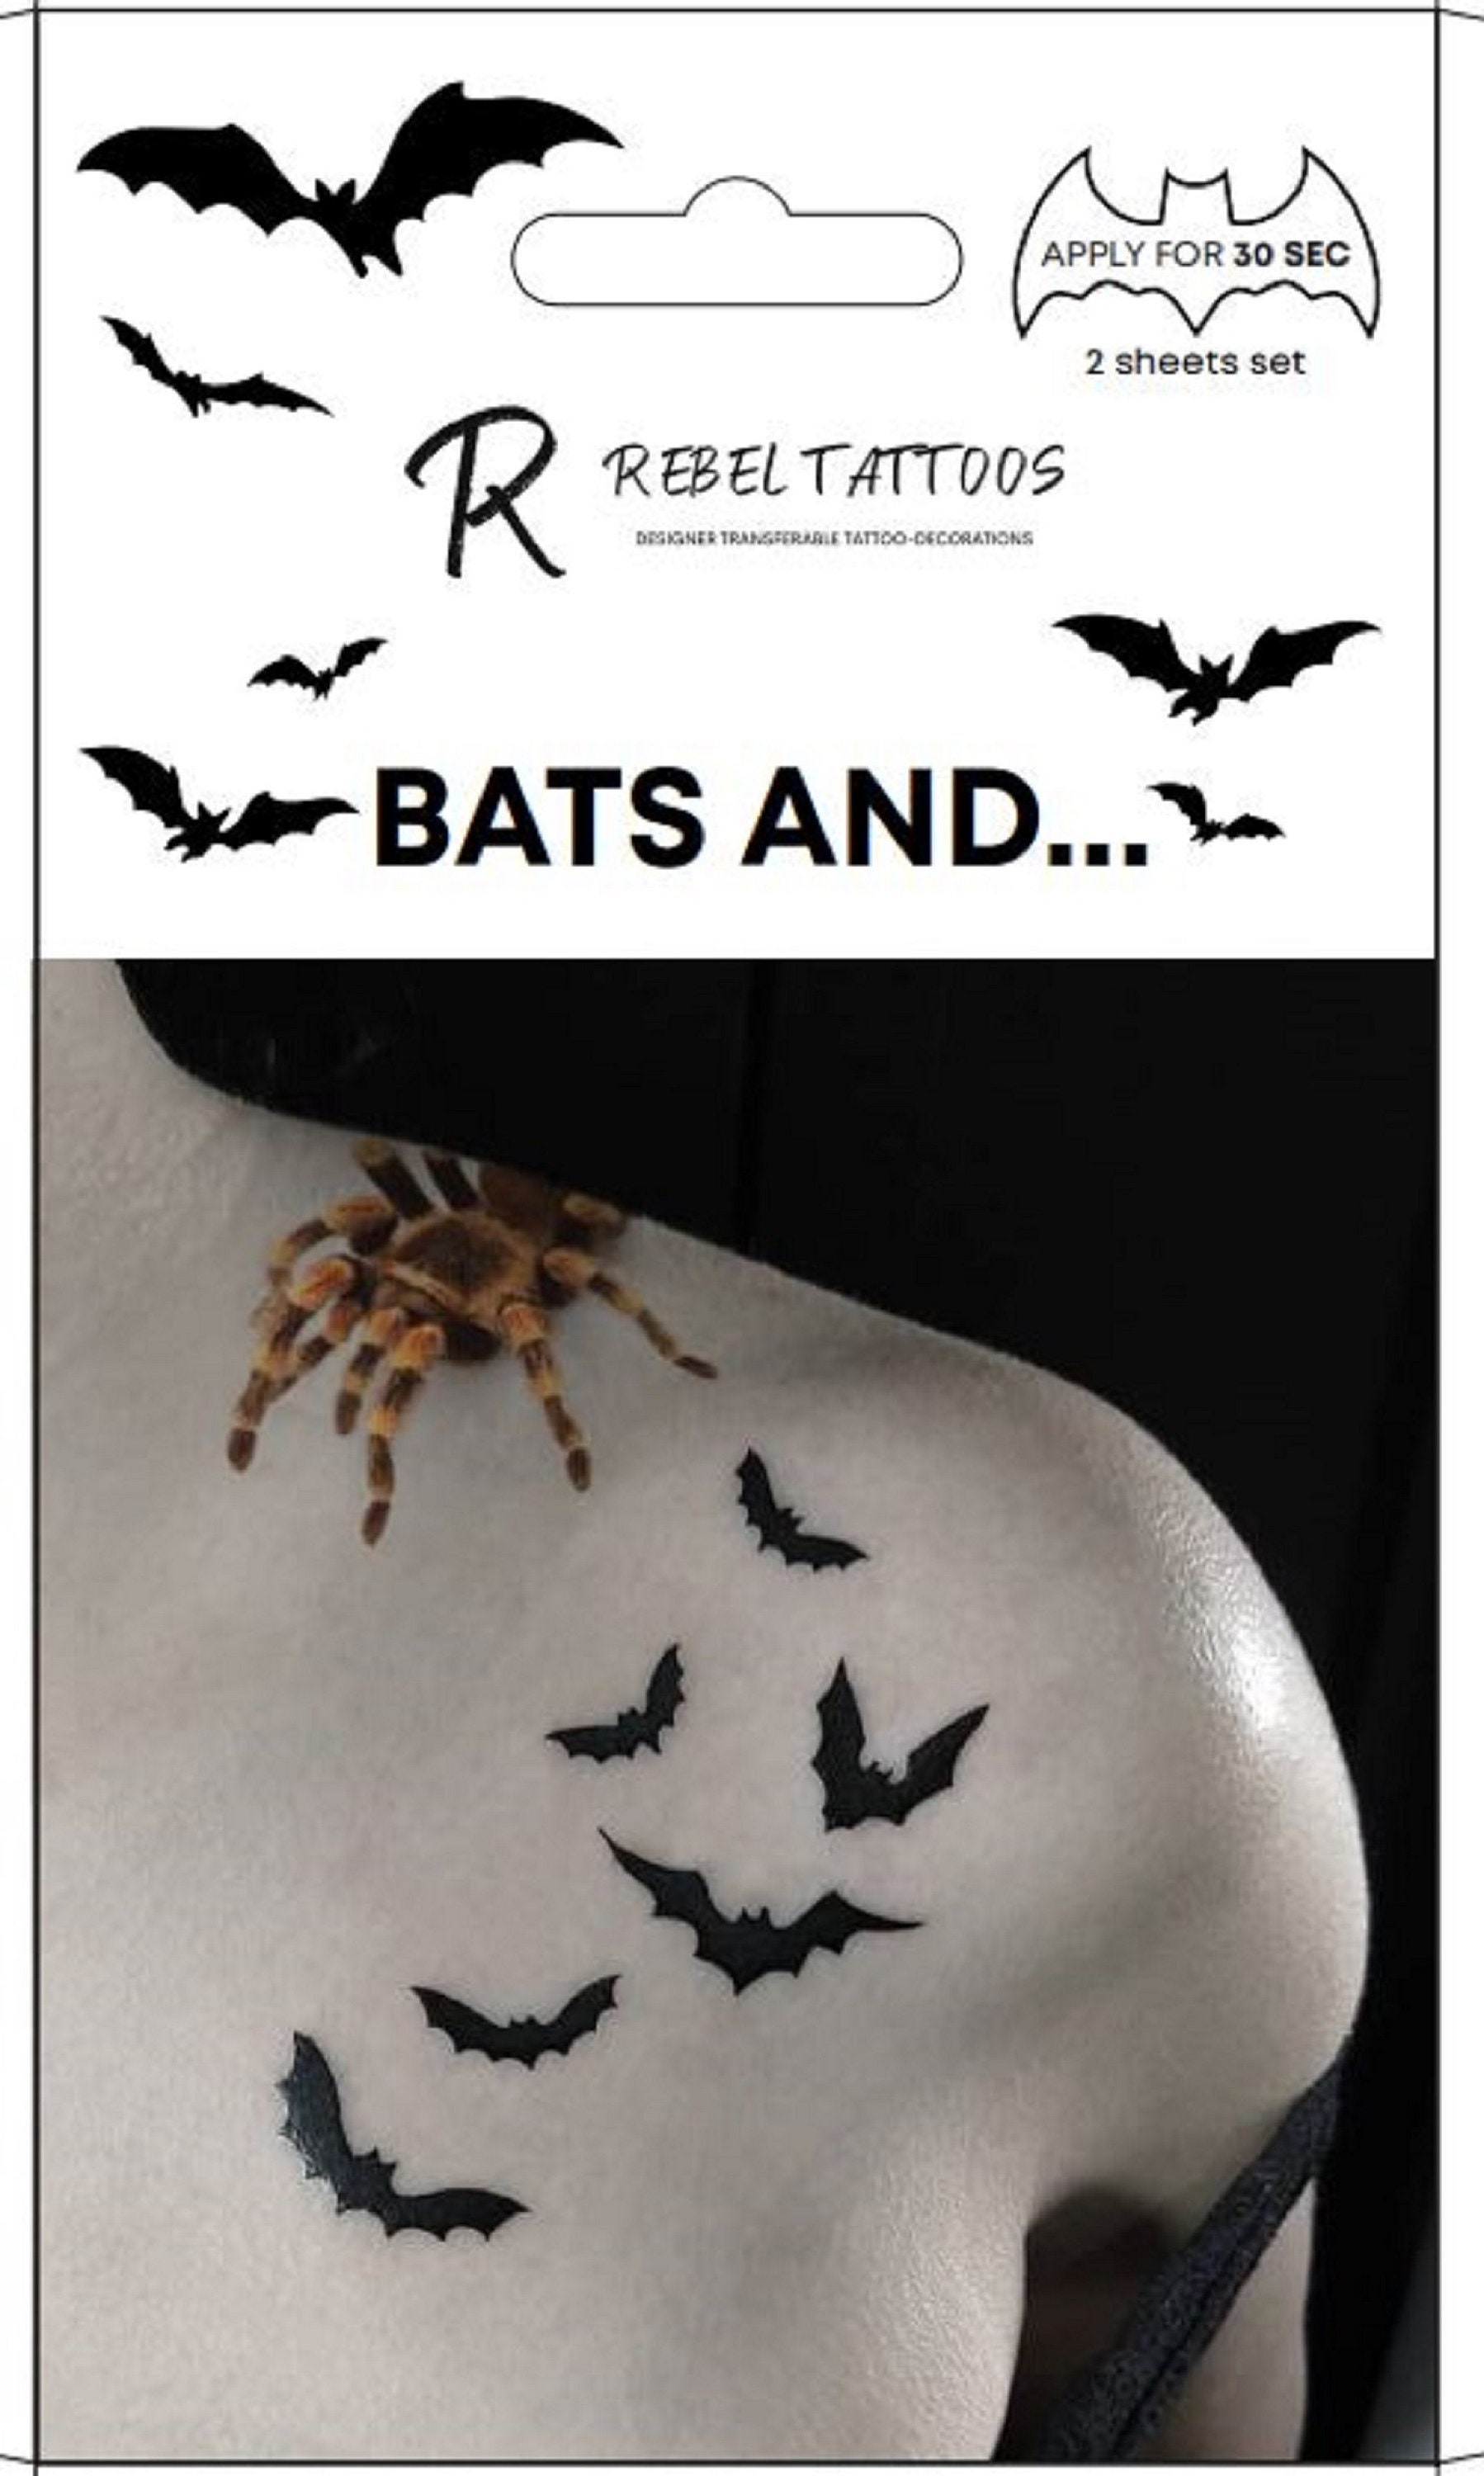 2665 Vampire Bat Tattoo Images Stock Photos  Vectors  Shutterstock